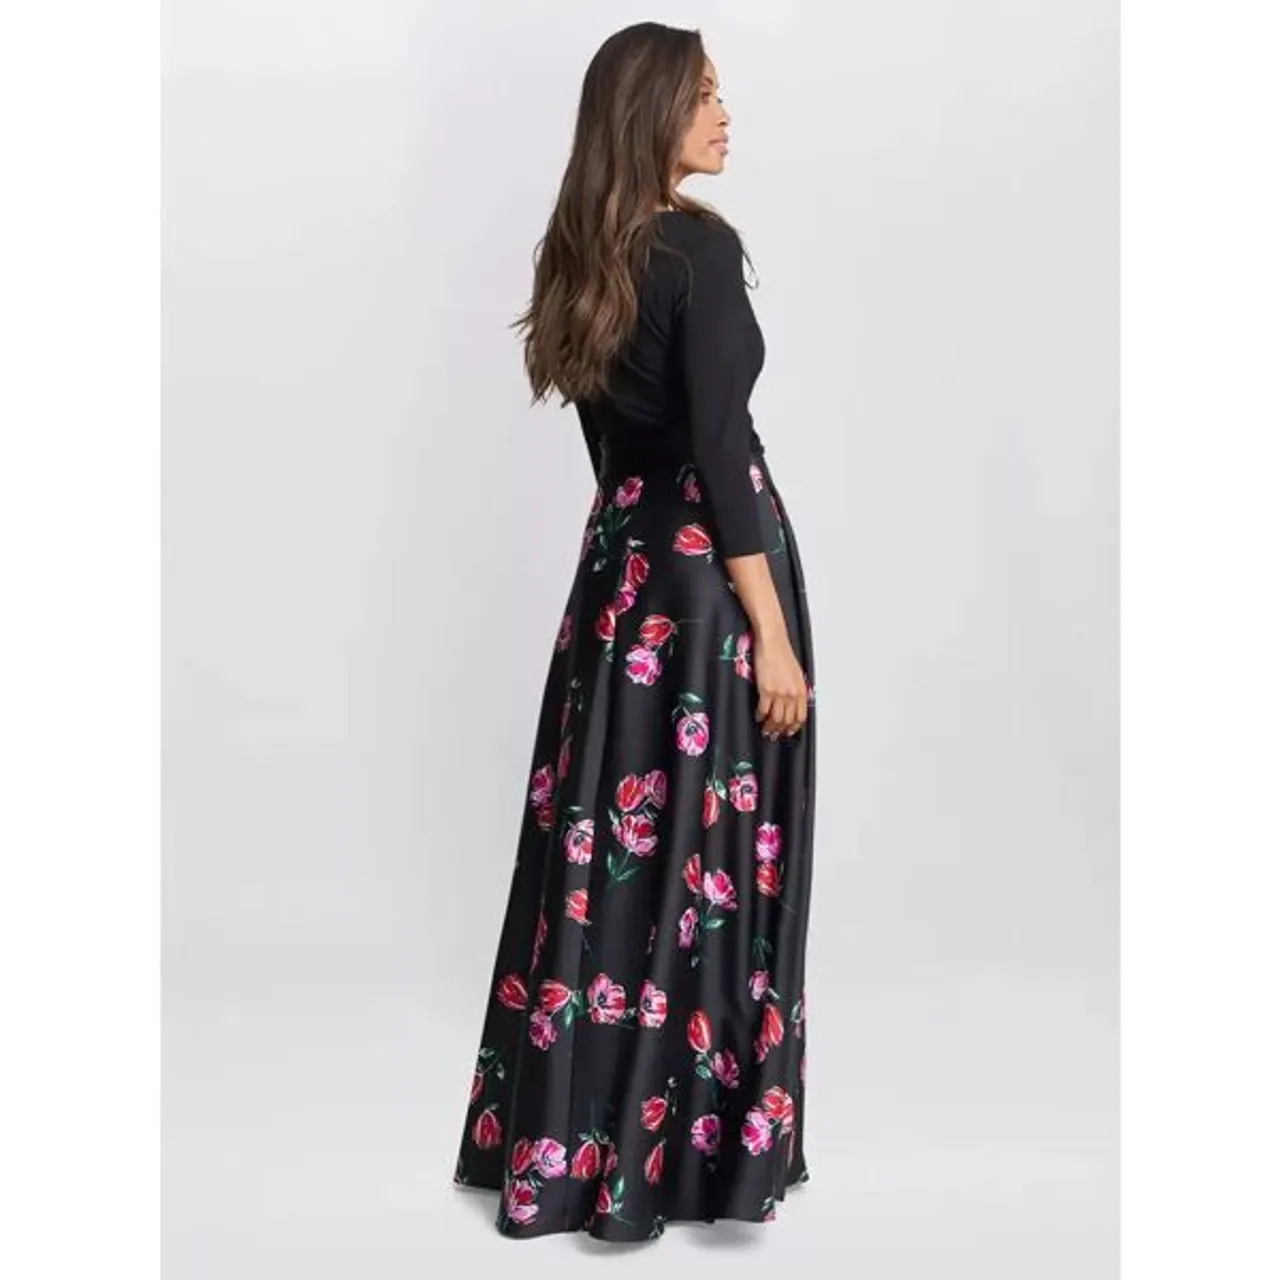 Gina Bacconi Athena Floral Satin Skirt Maxi Dress, Black/Pink - Black/Pink - Female